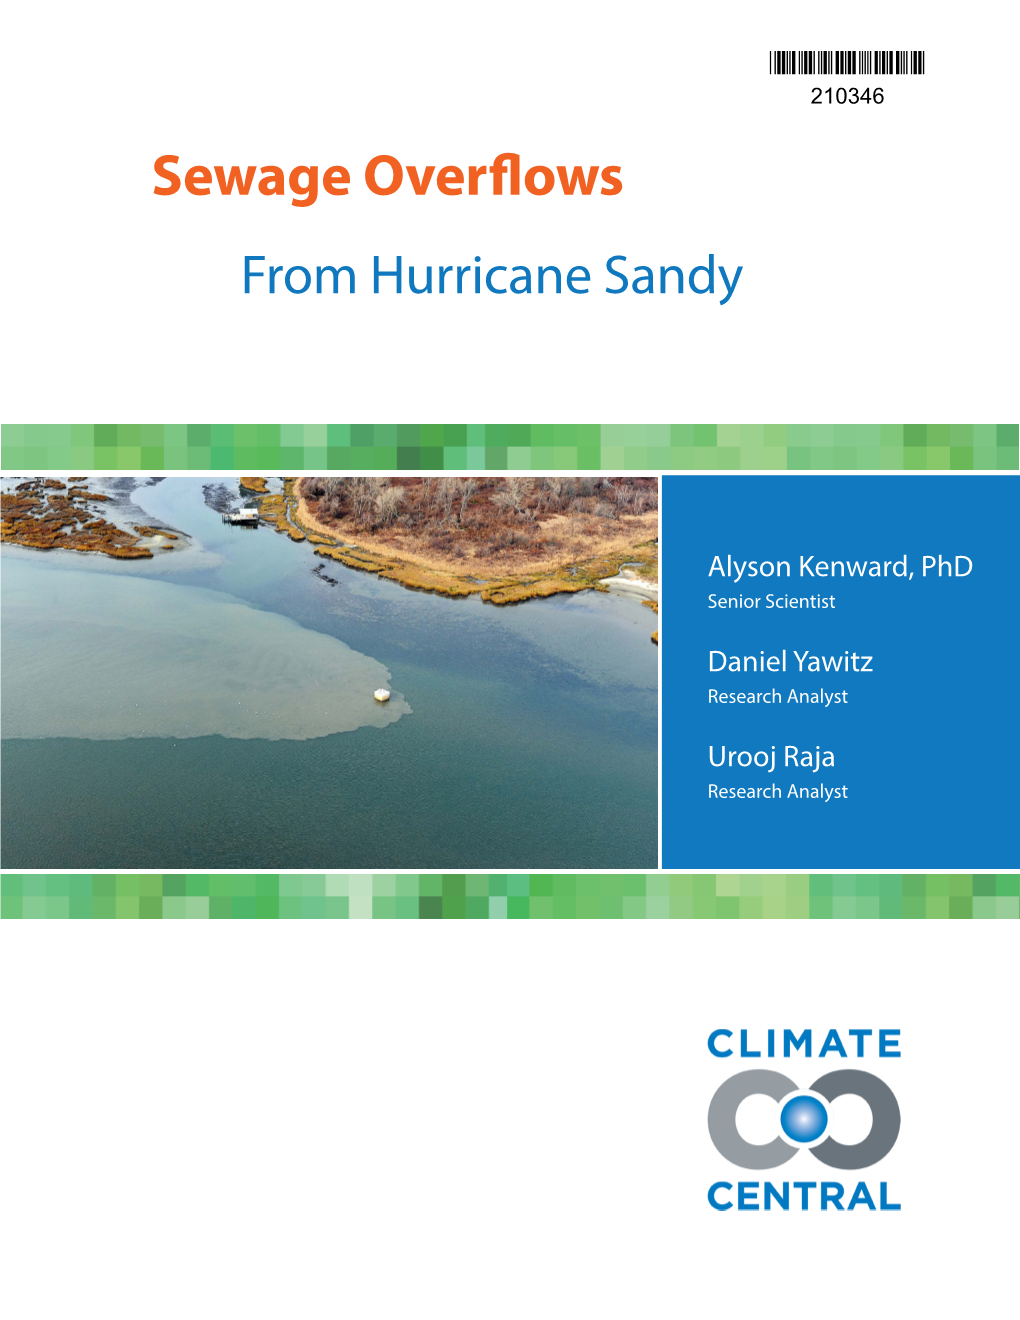 Sewage Overflows from Hurricane Sandy